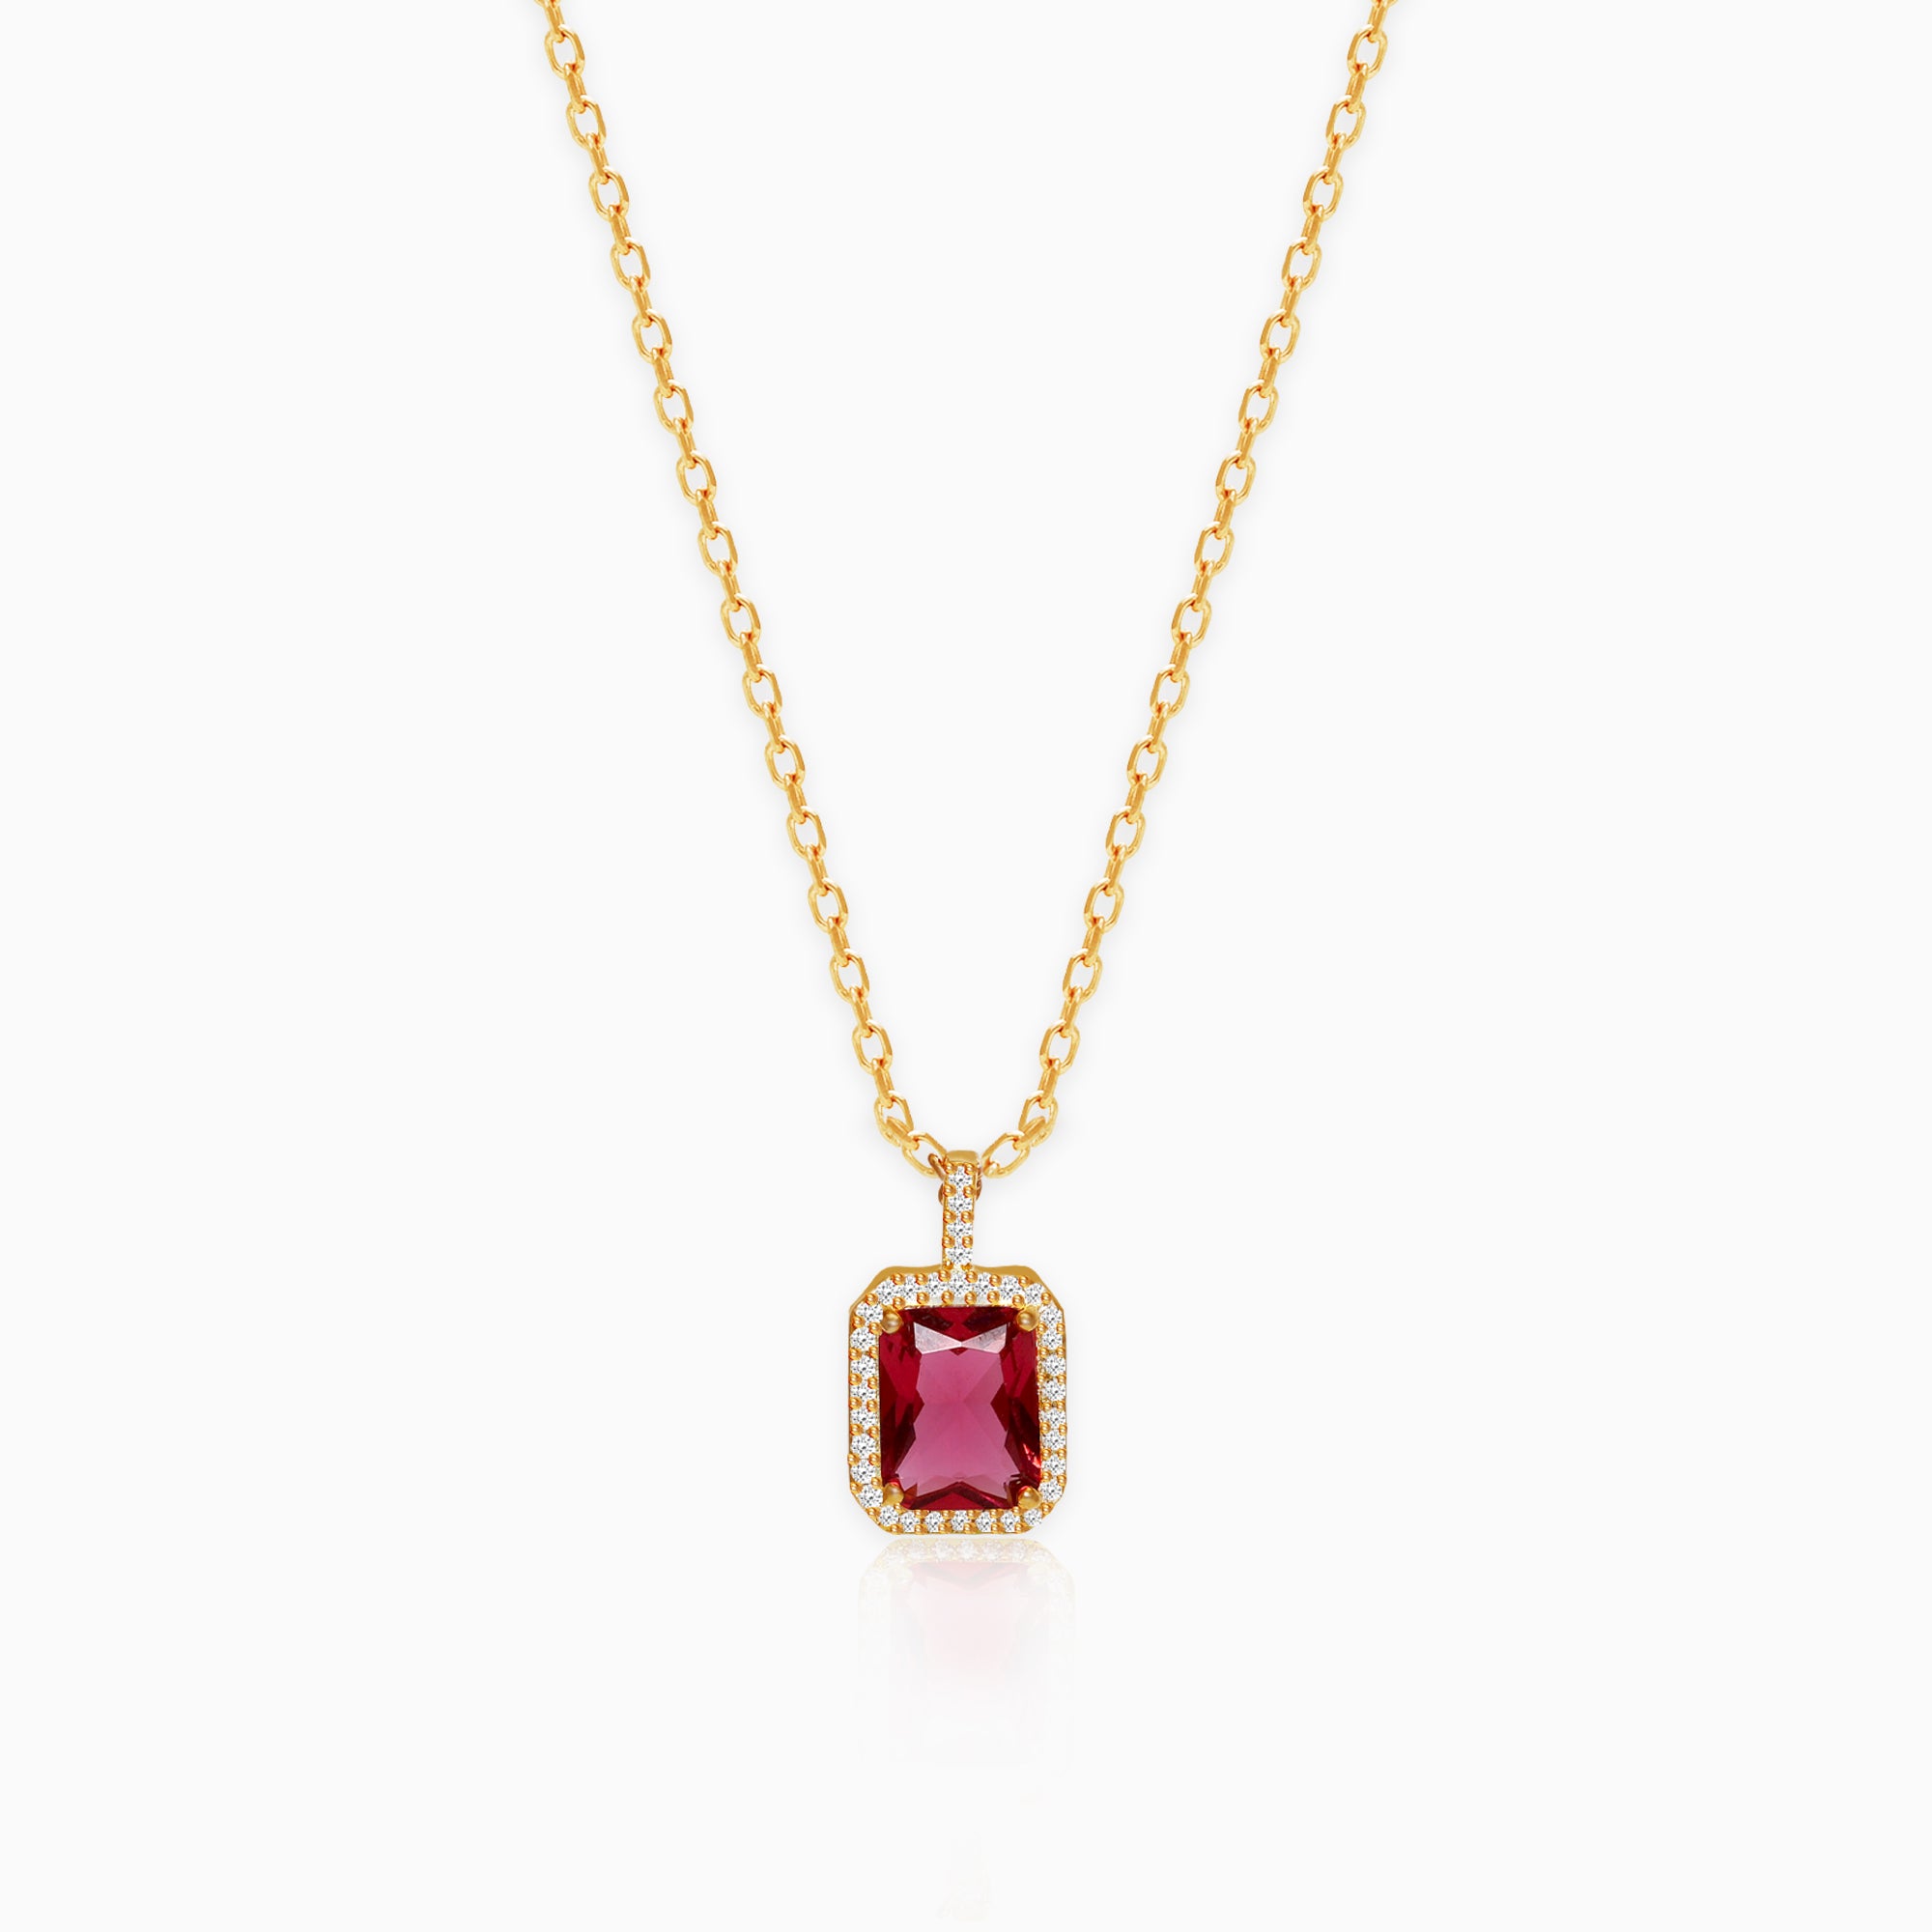 Buy Ruby Necklaces Online | BlueStone.com - India's #1 Online Jewellery  Brand